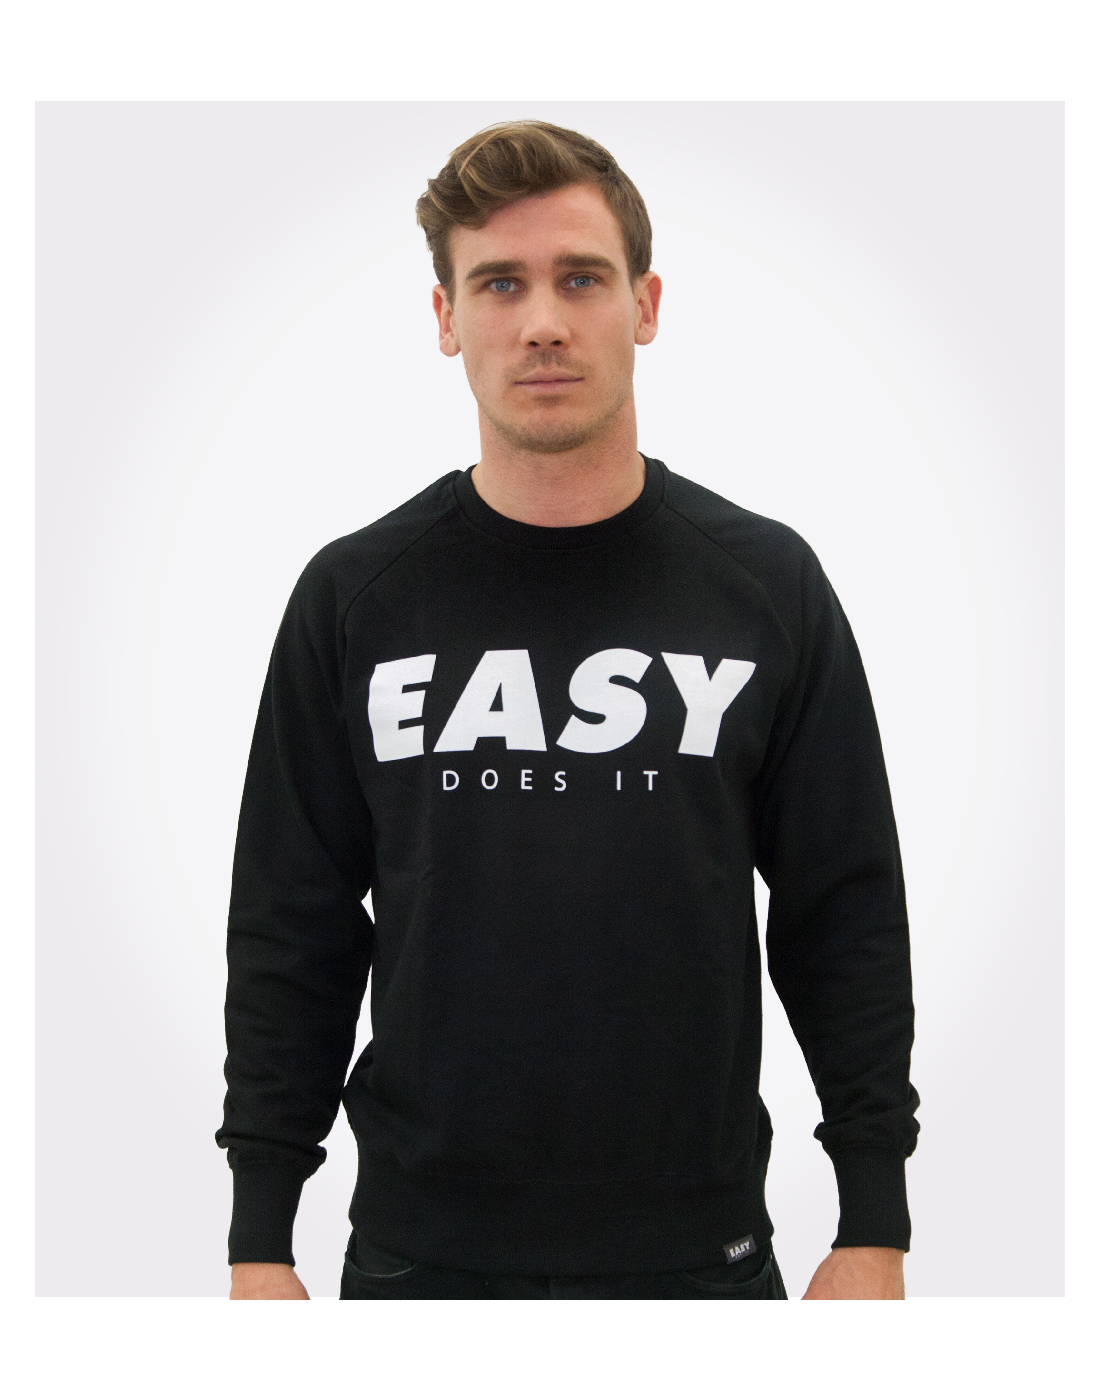 EASY Sweater Black